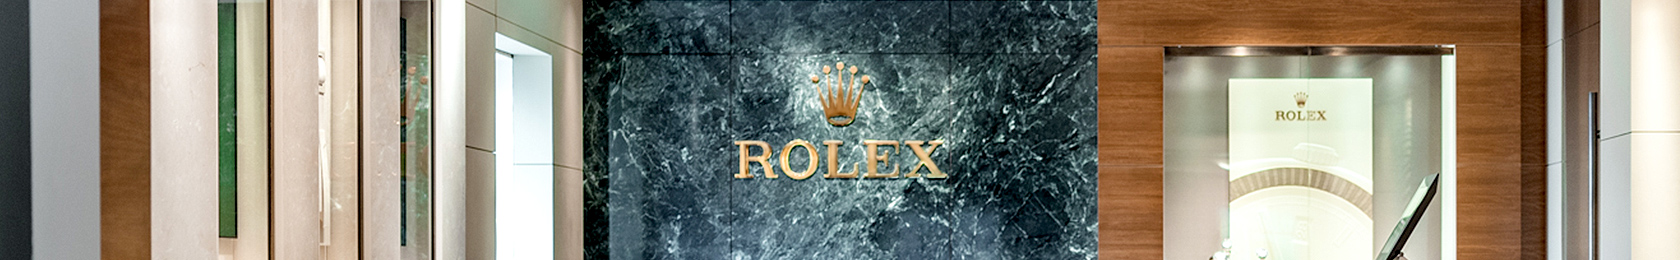 Rolex at Alvin Goldfarb Jeweler